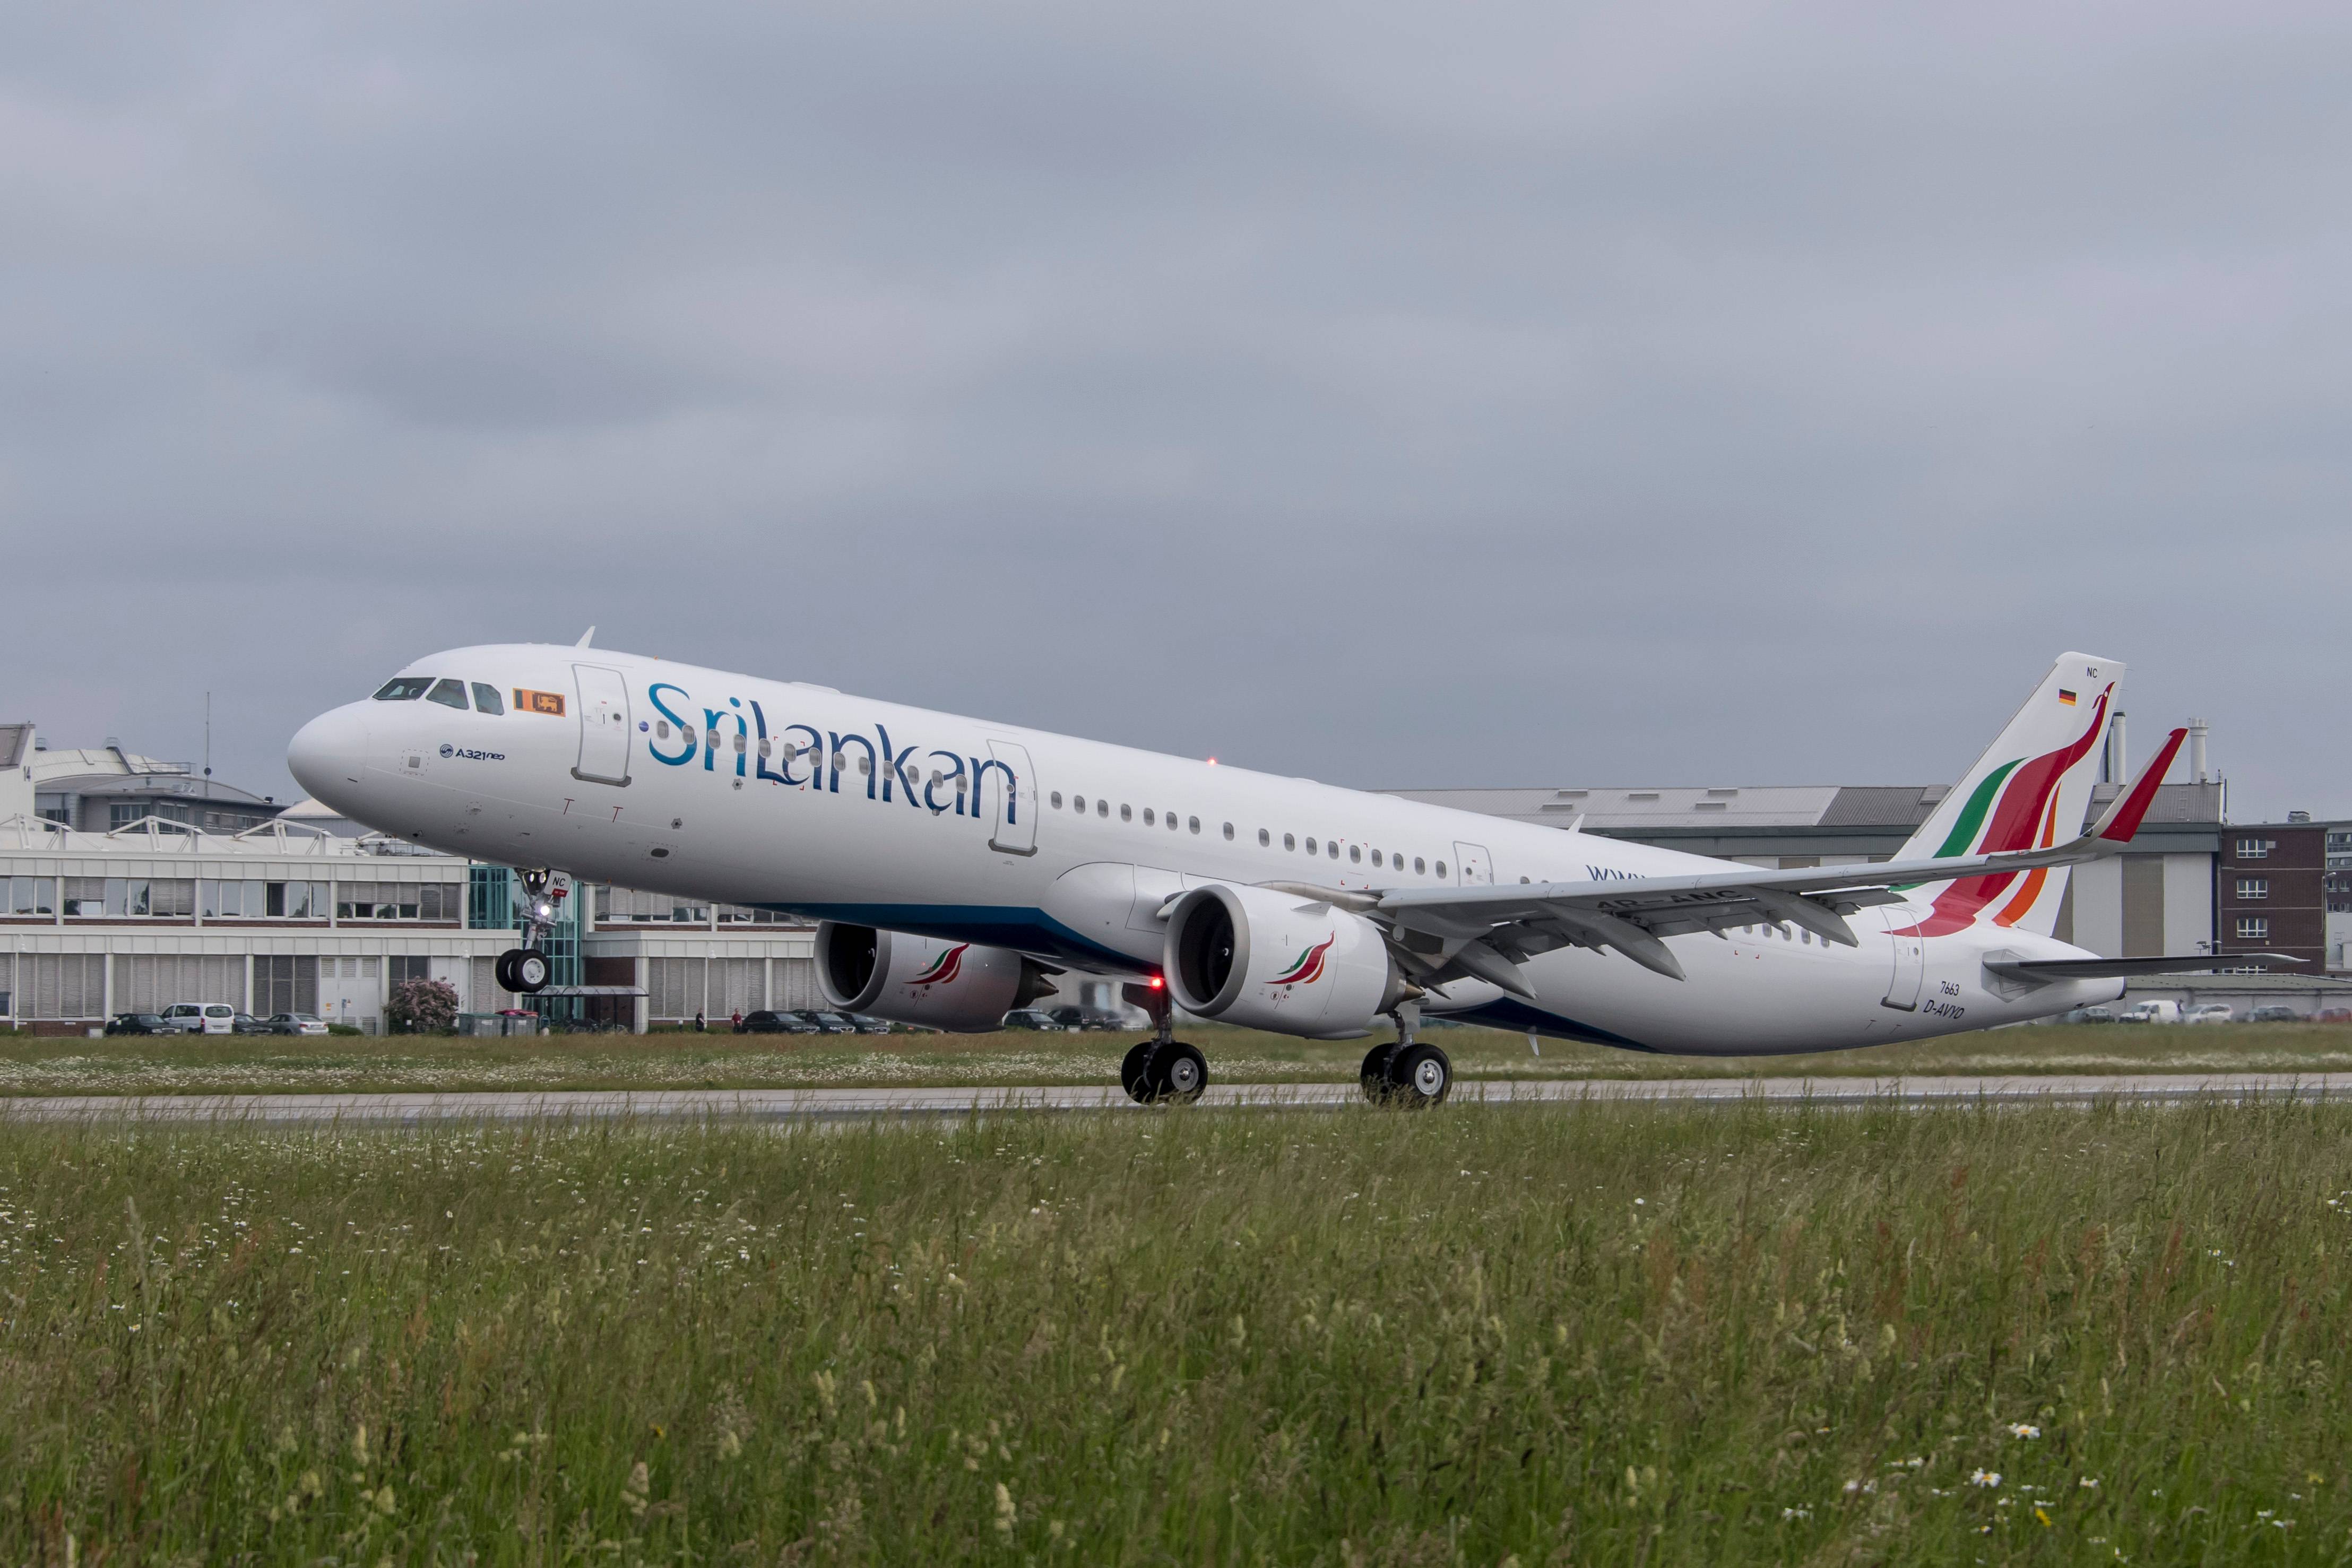 alt="SriLankan Airbus A321neo Taking Off"